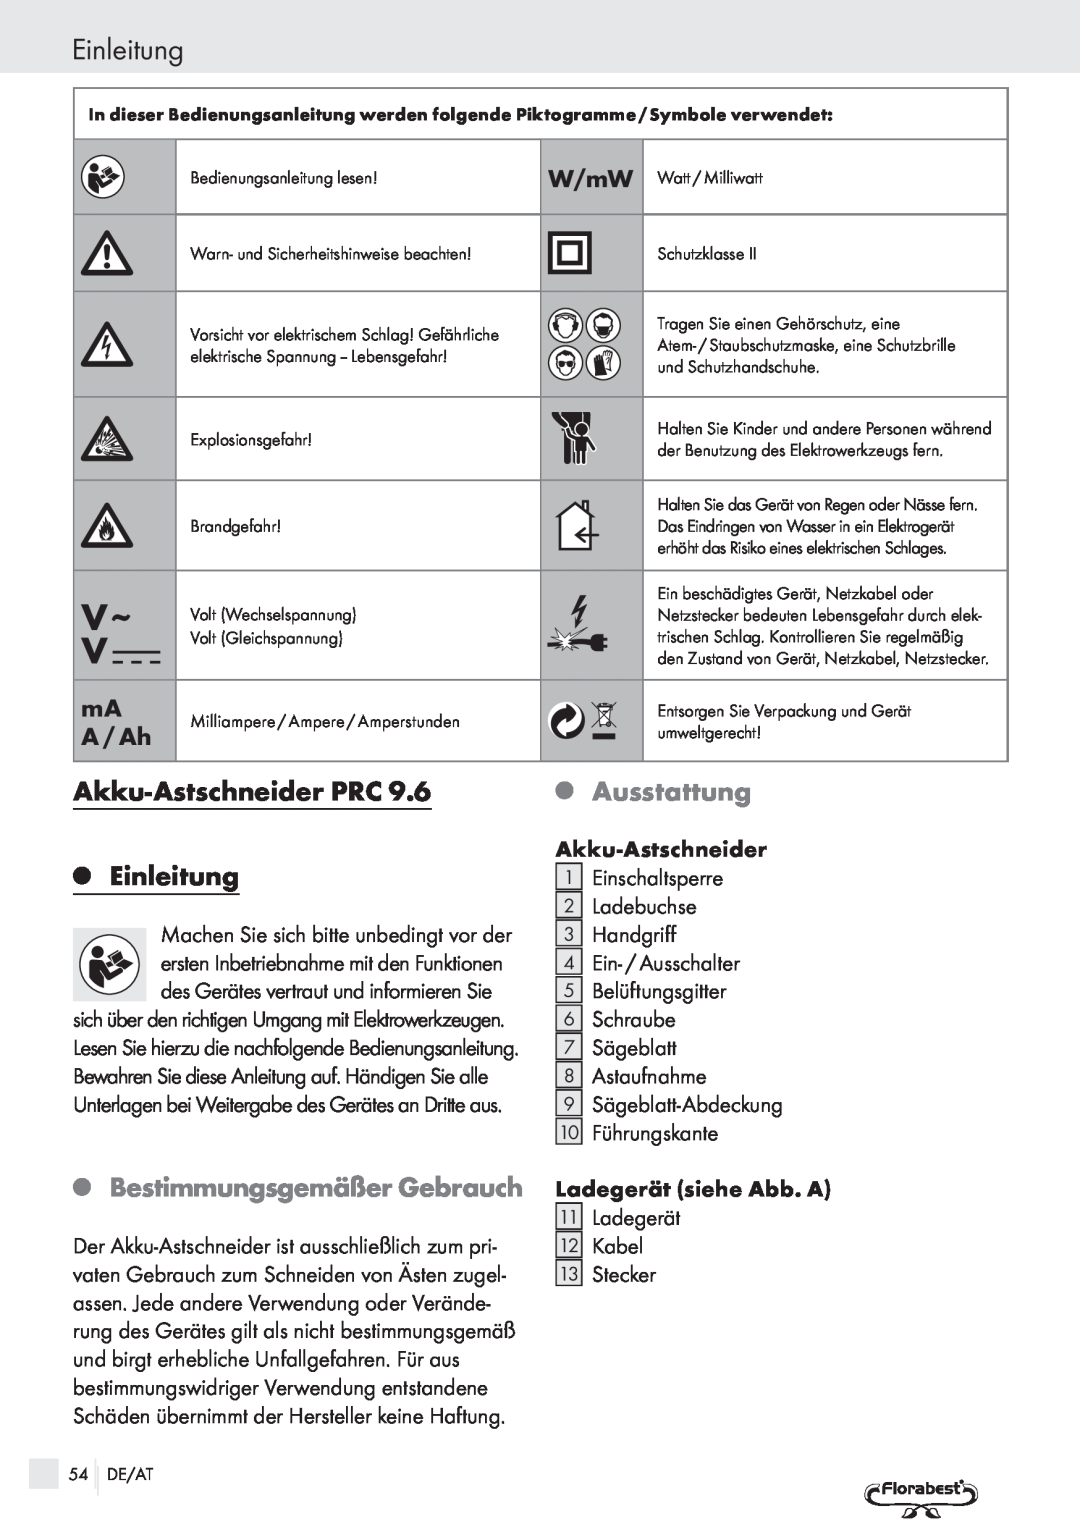 Bench PRC 9.6 manual Akku-AstschneiderPRC, Q Ausstattung, Q Einleitung, Q Bestimmungsgemäßer Gebrauch, W/mW, A / Ah 